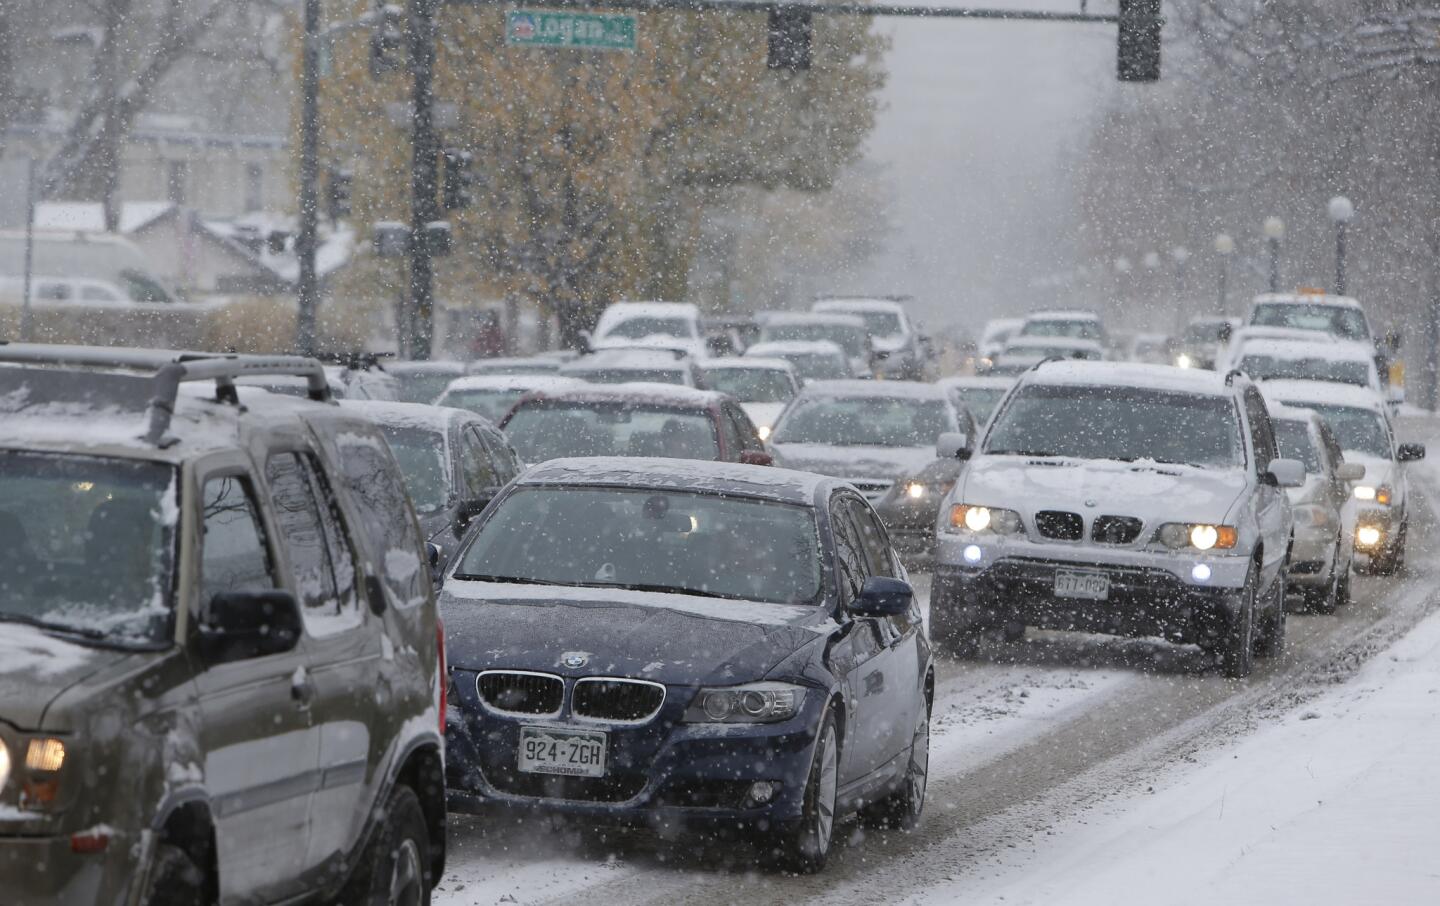 Motorists inch their way along Speer Boulevard in Denver as snow falls Wednesday.